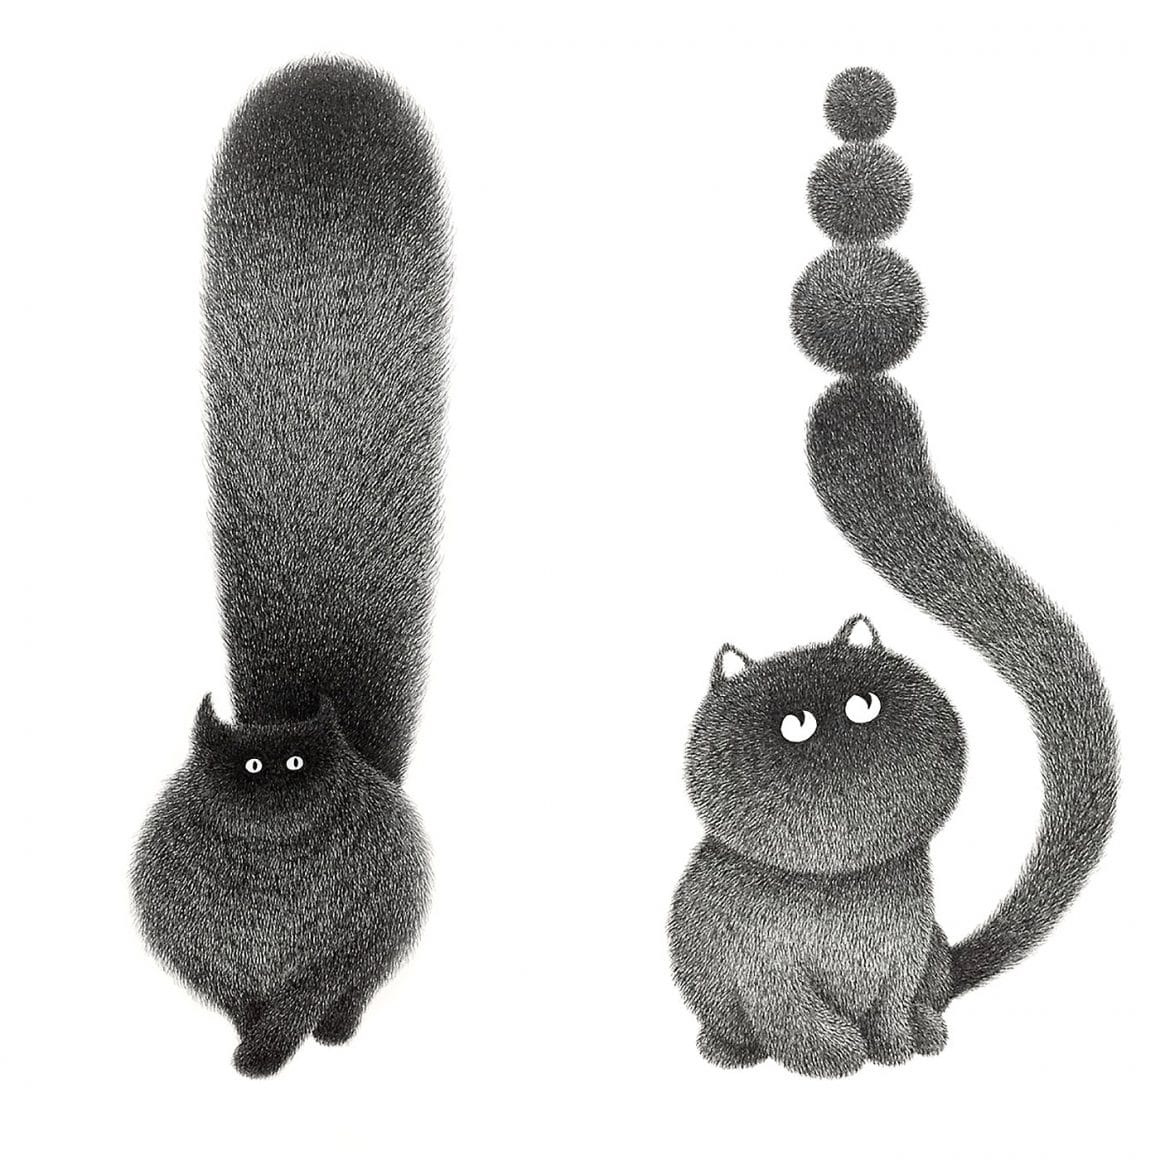 Dessin de chats de l'artiste Kamwei Fong 